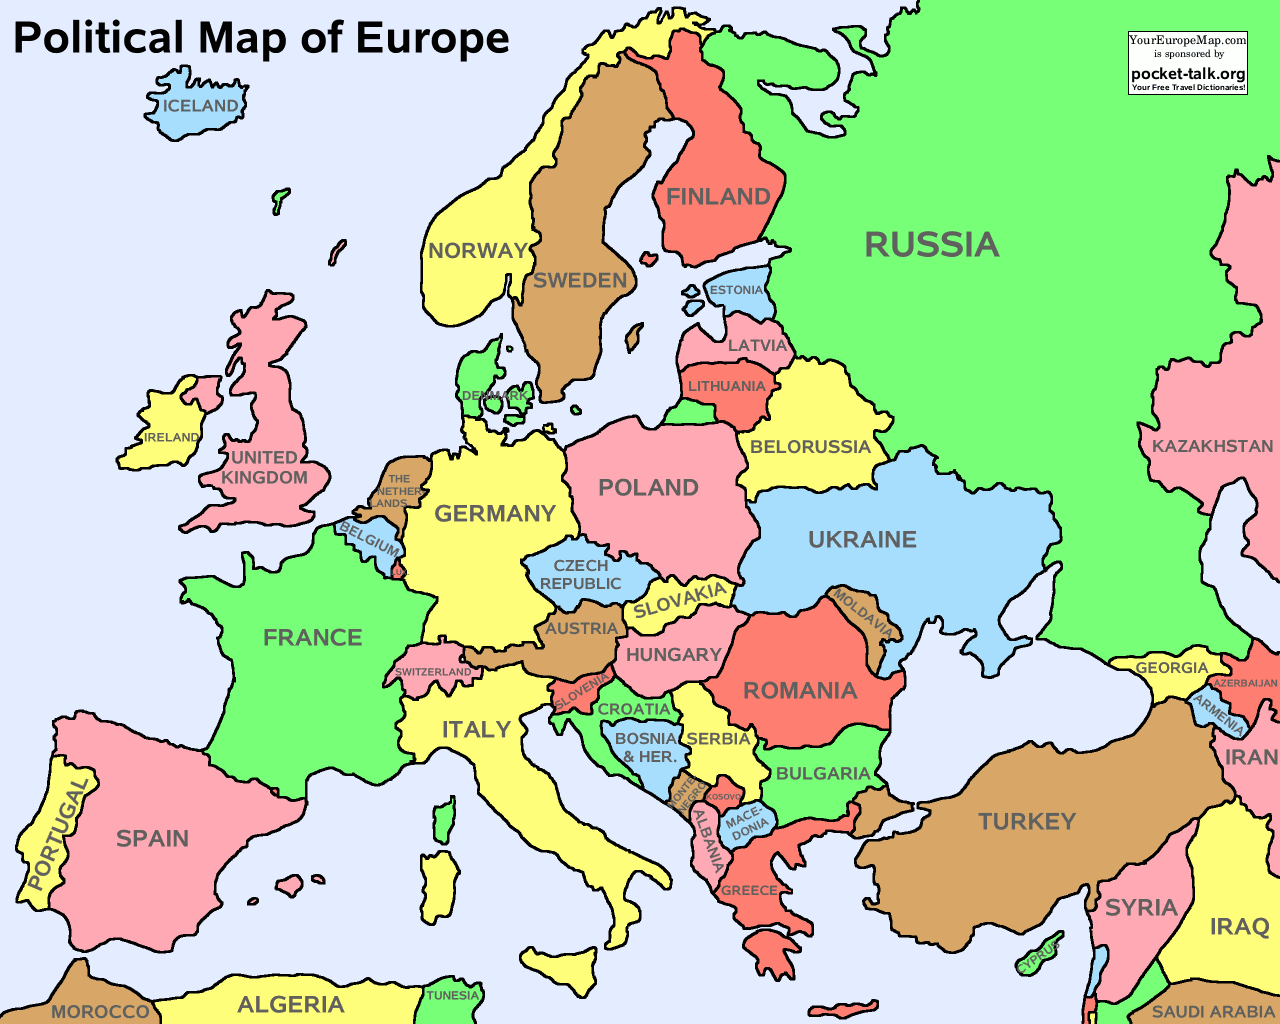 Map Of Europe Showing Switzerland